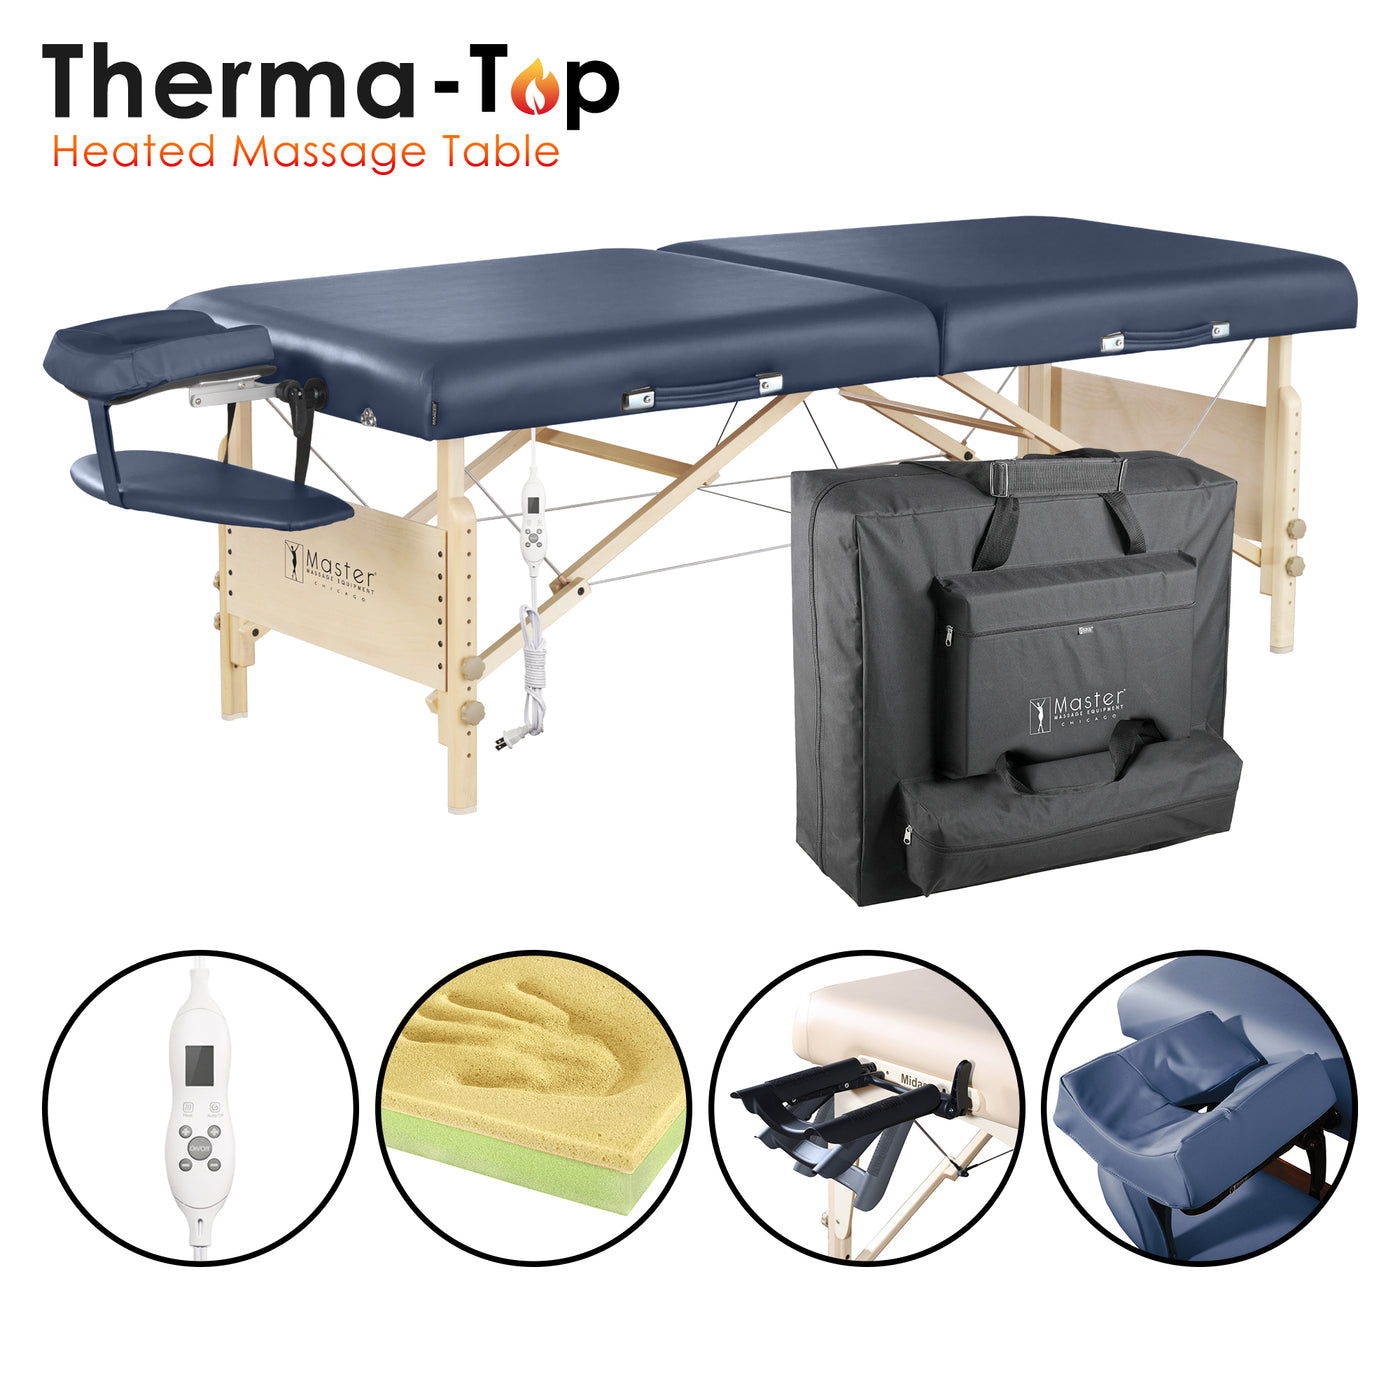 Table de massage chauffante portable pliante THERMA TOP - Table de